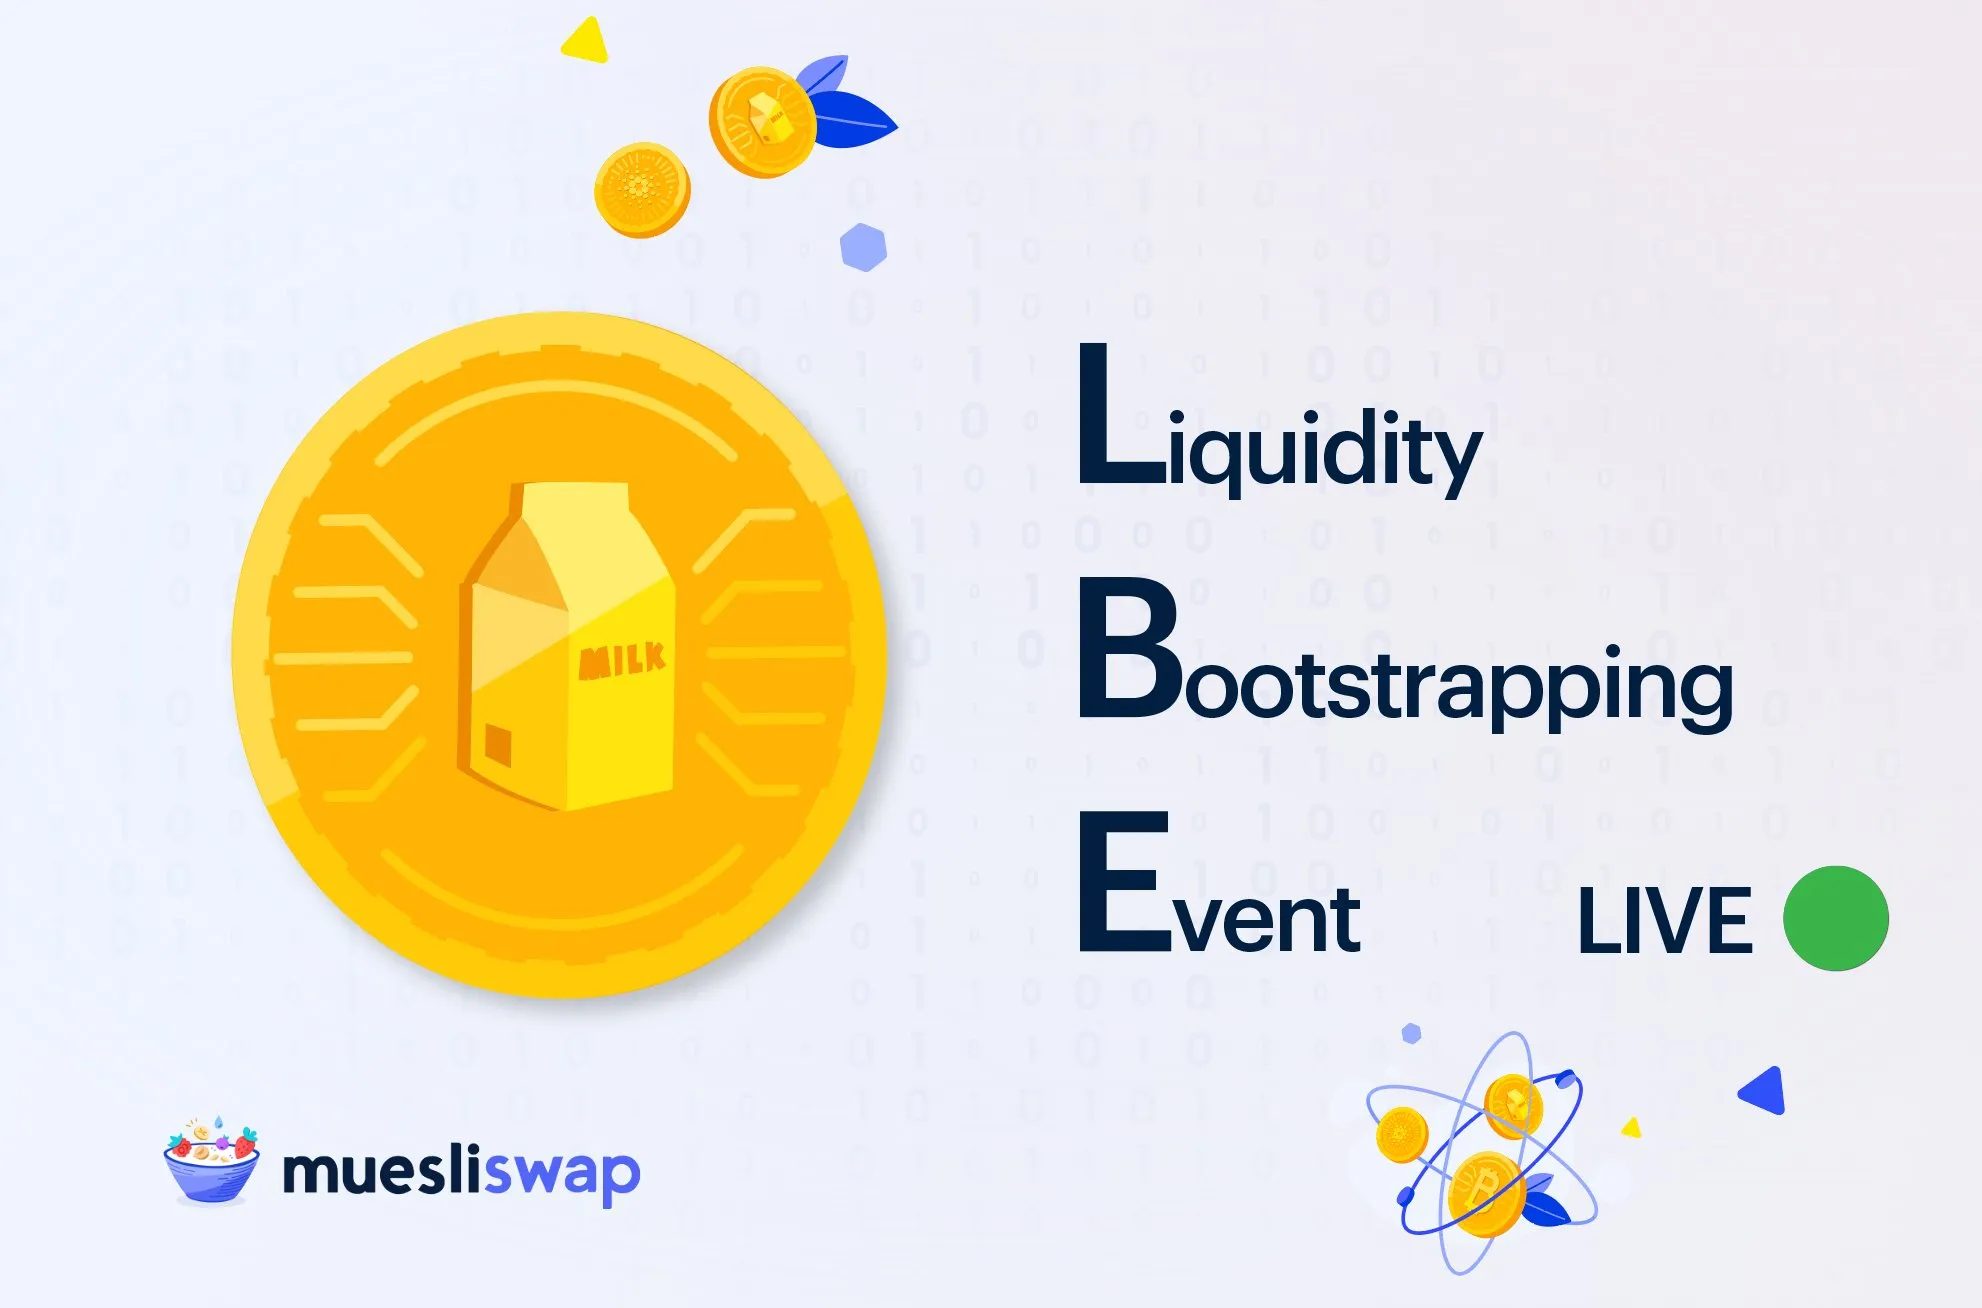 MuesliSwap's liquidity bootstrapping event